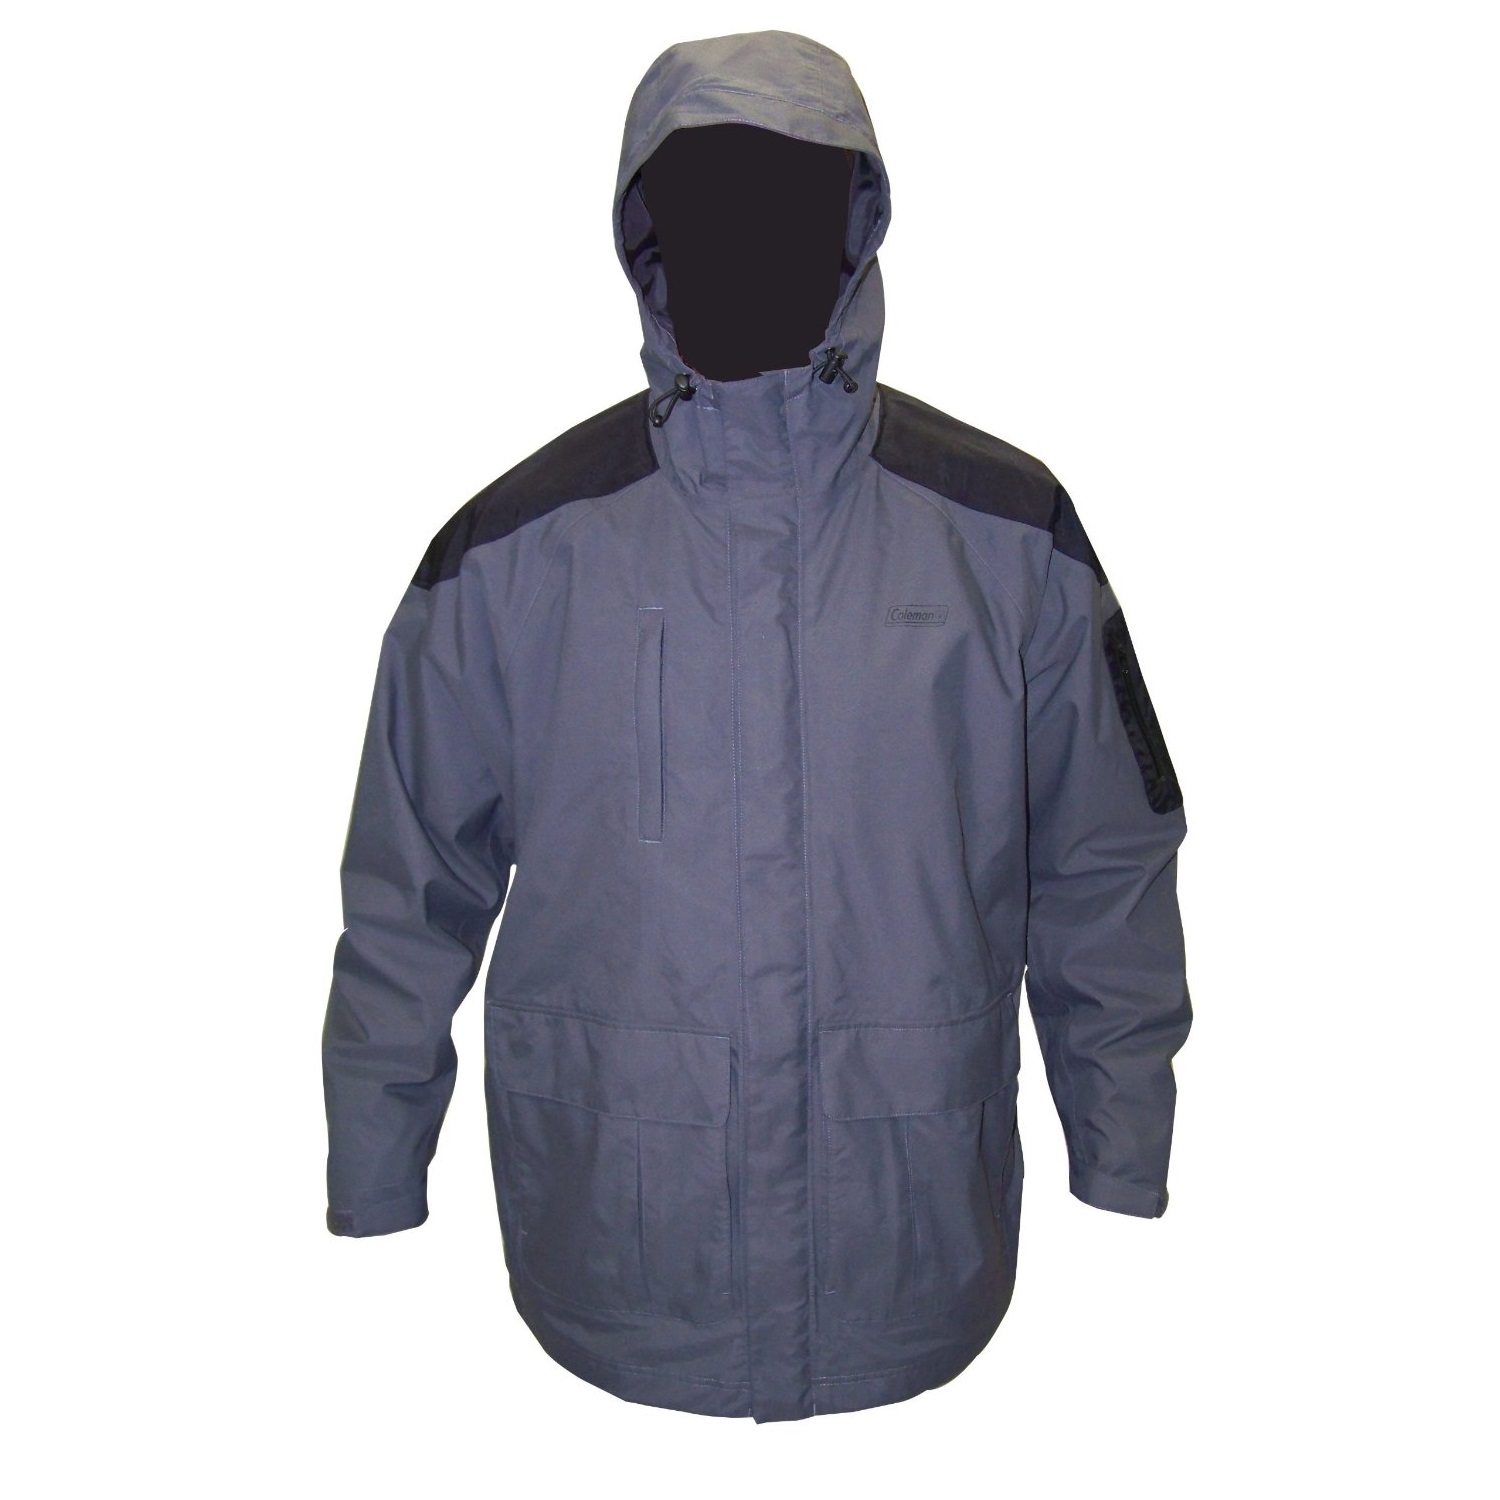 Coleman Apparel Fleece Lined Black Jacket Small 2000014382 | eBay